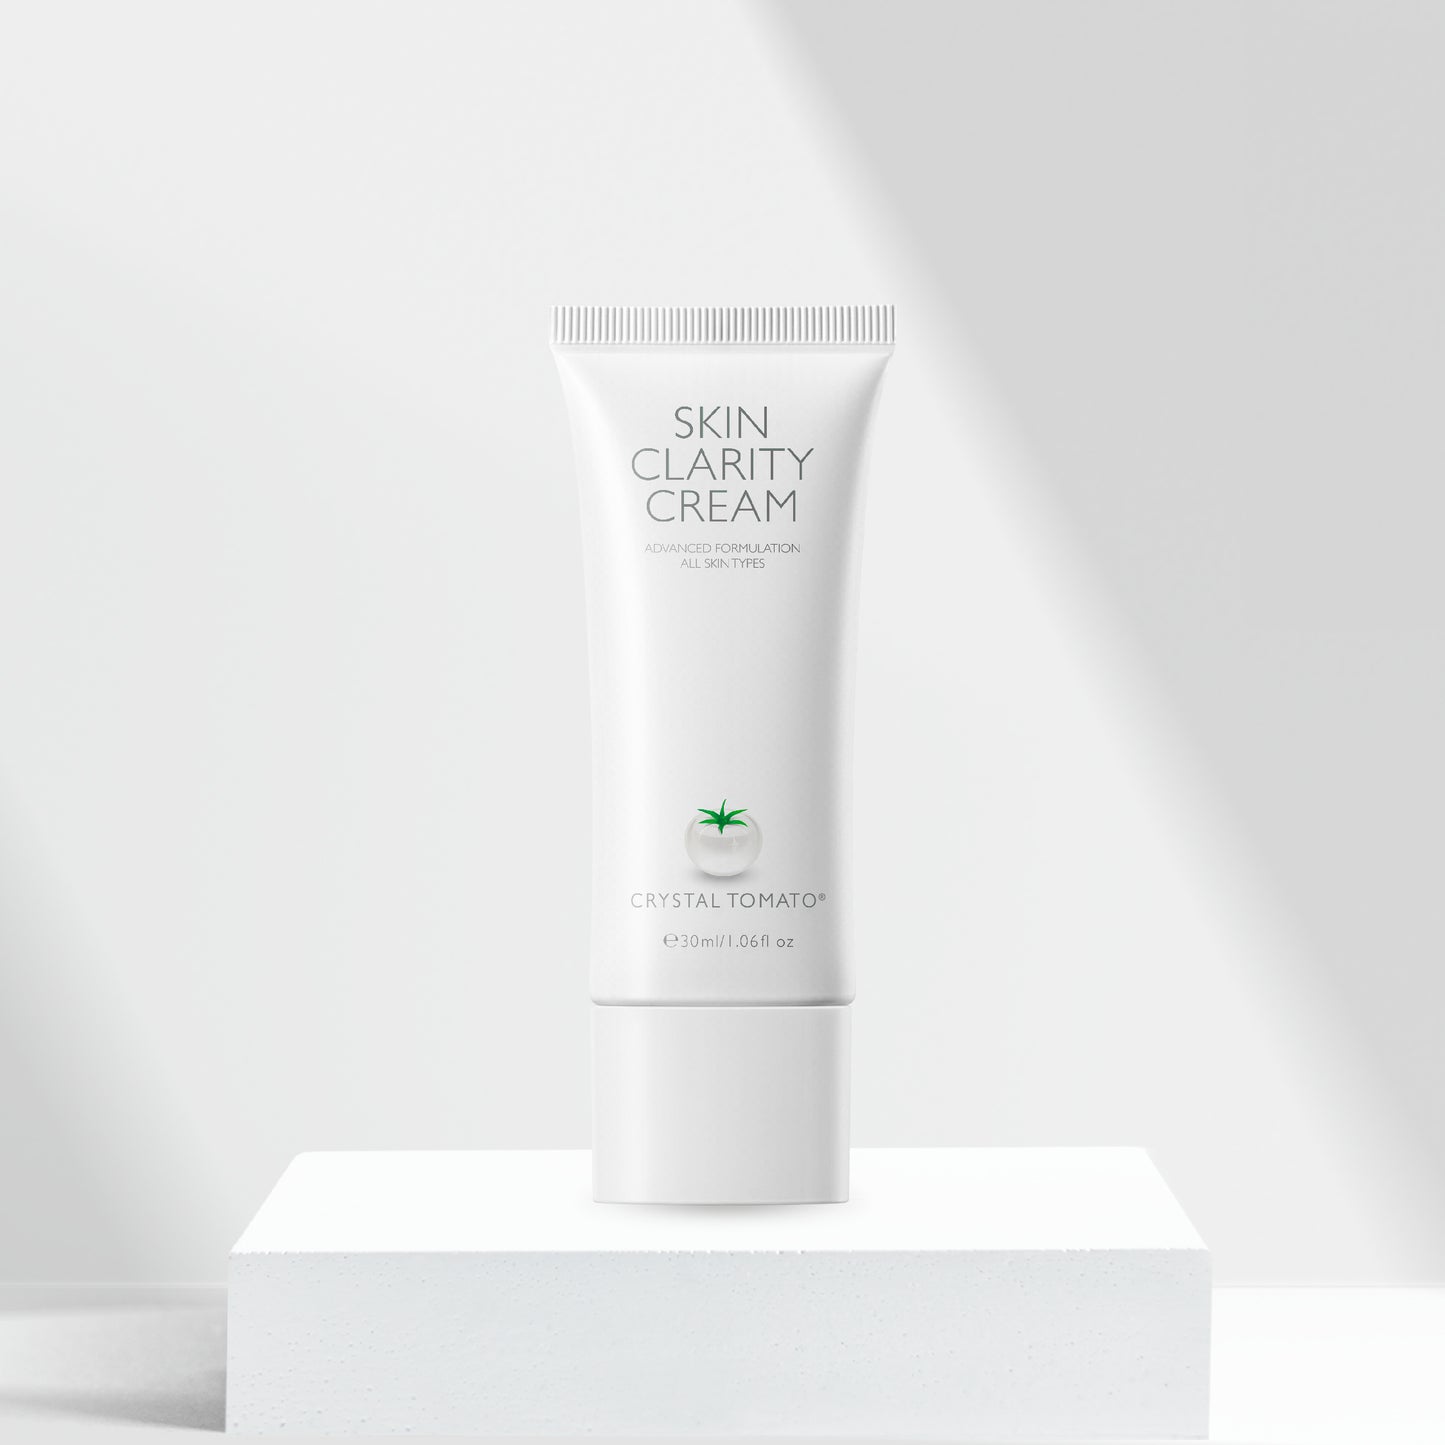 Skin Clarity Cream (Advanced Formulation)